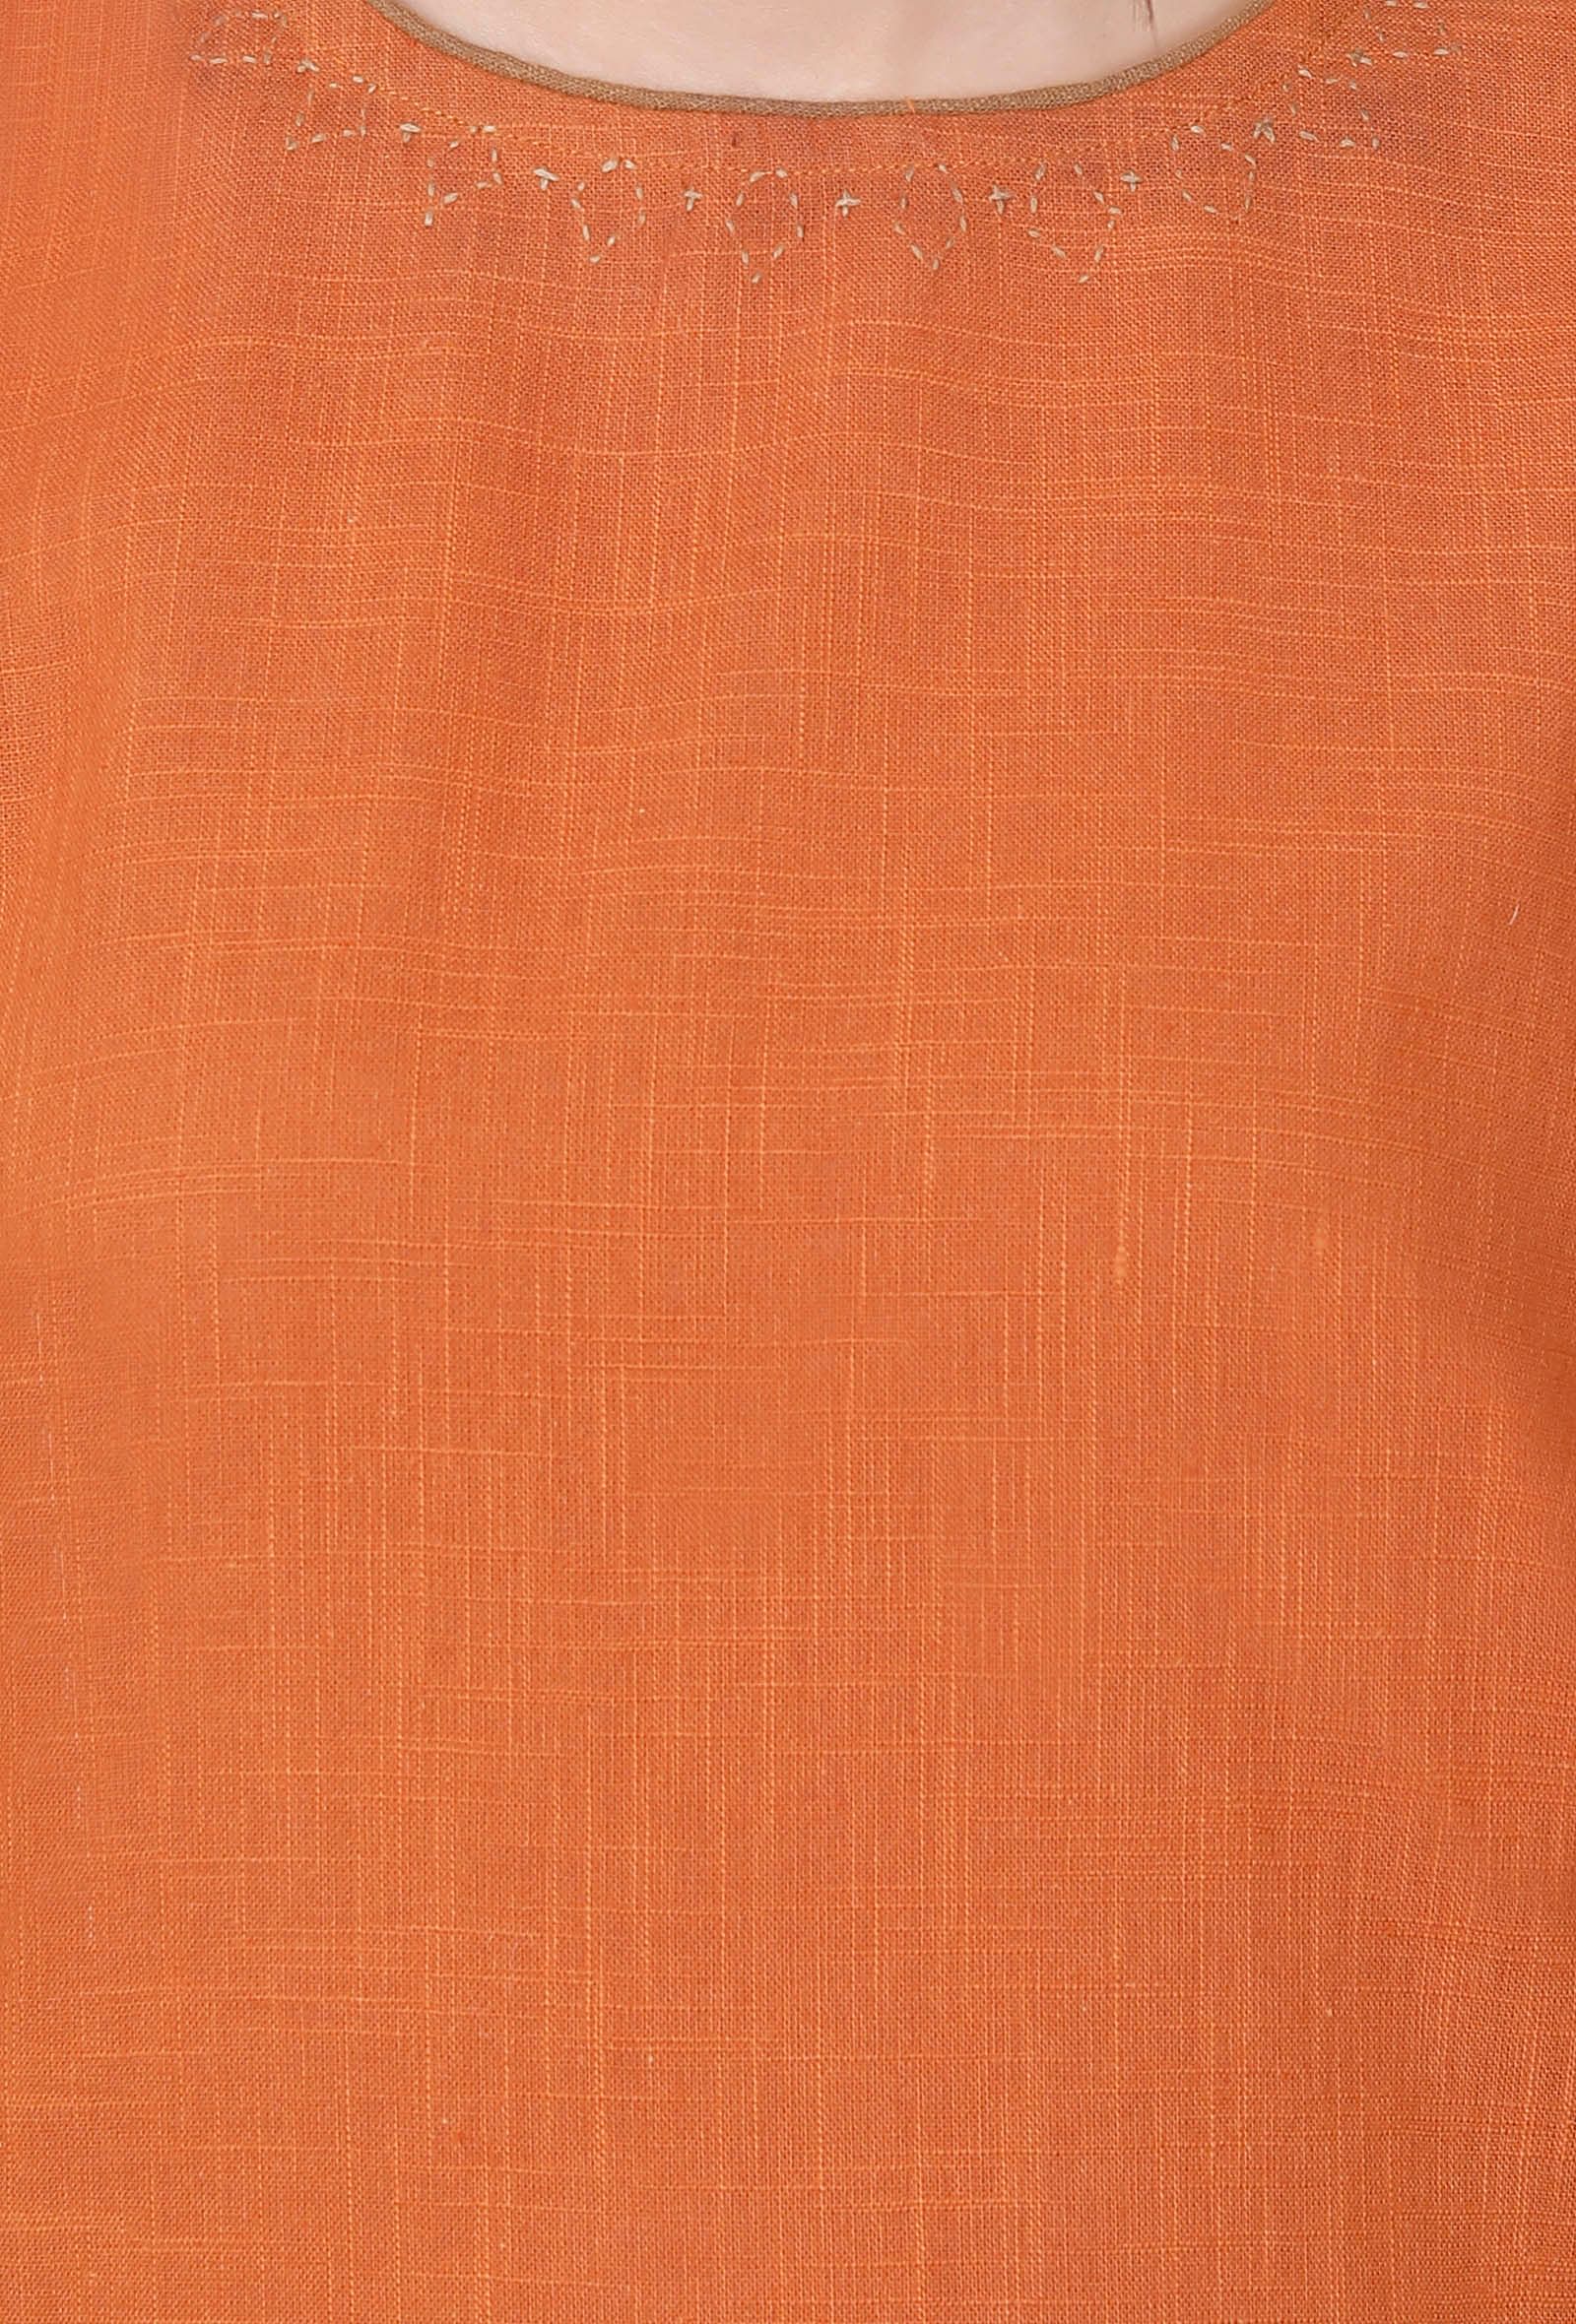 Color Blocked Rust Orange A-line kurta